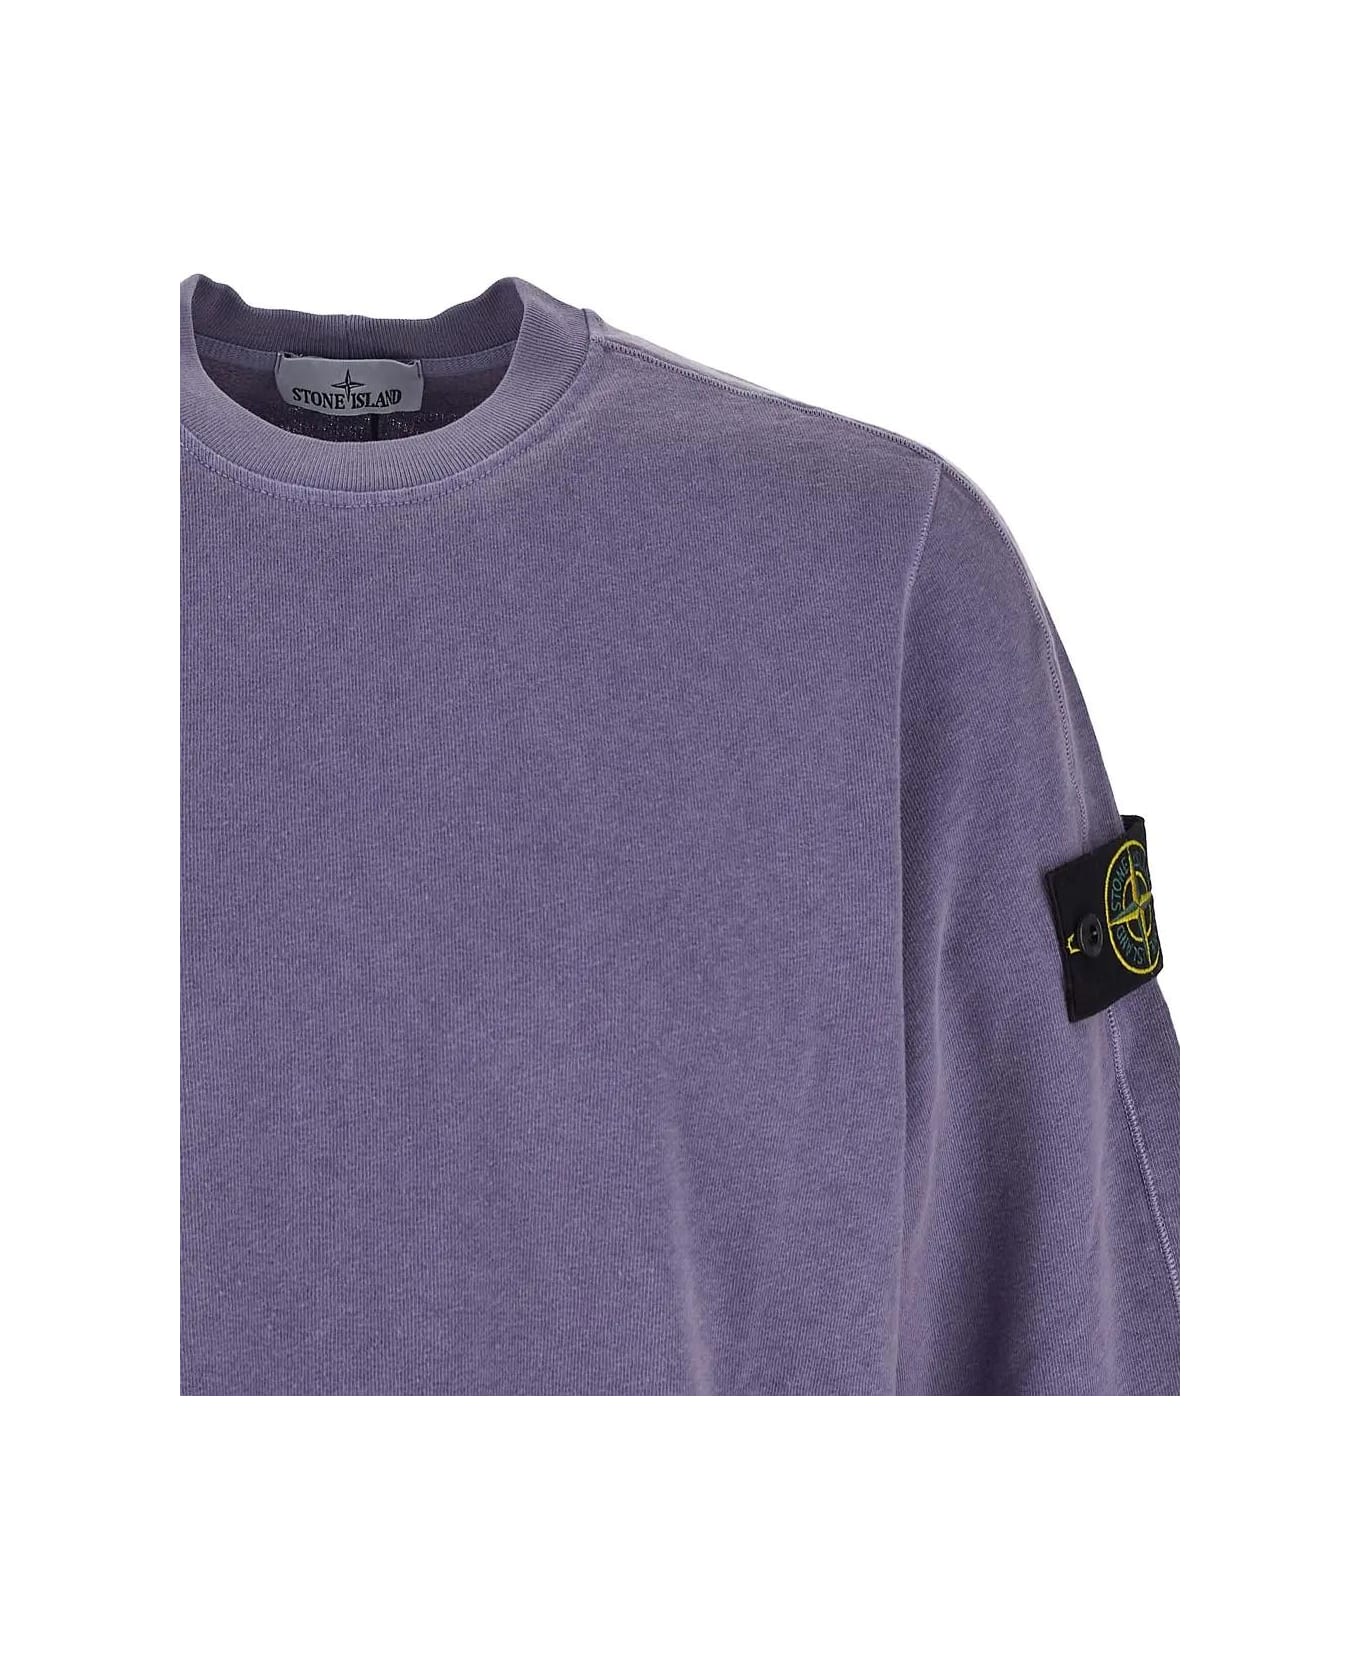 Stone Island Cotton Sweatshirt - PURPLE